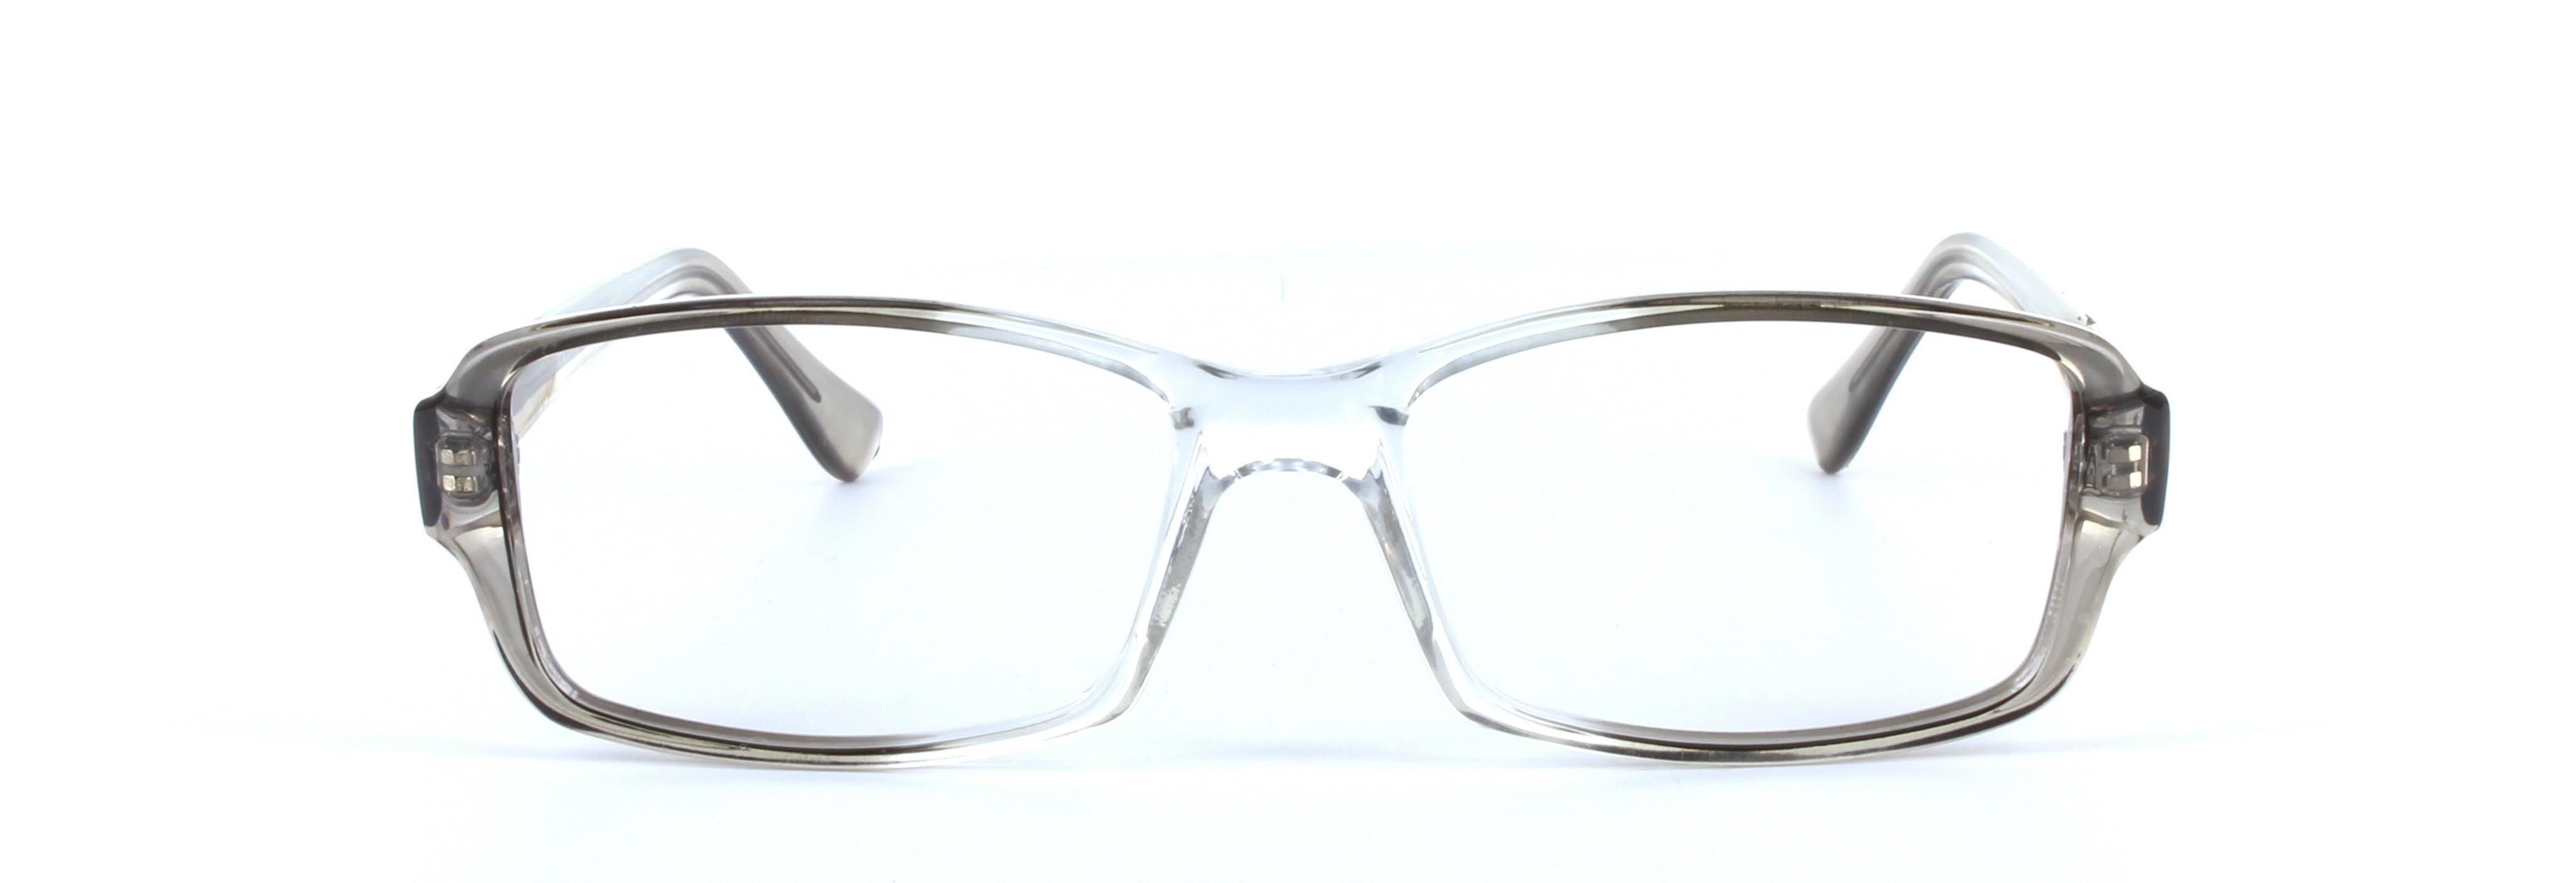 Chico Grey Full Rim Rectangular Plastic Glasses - Image View 5